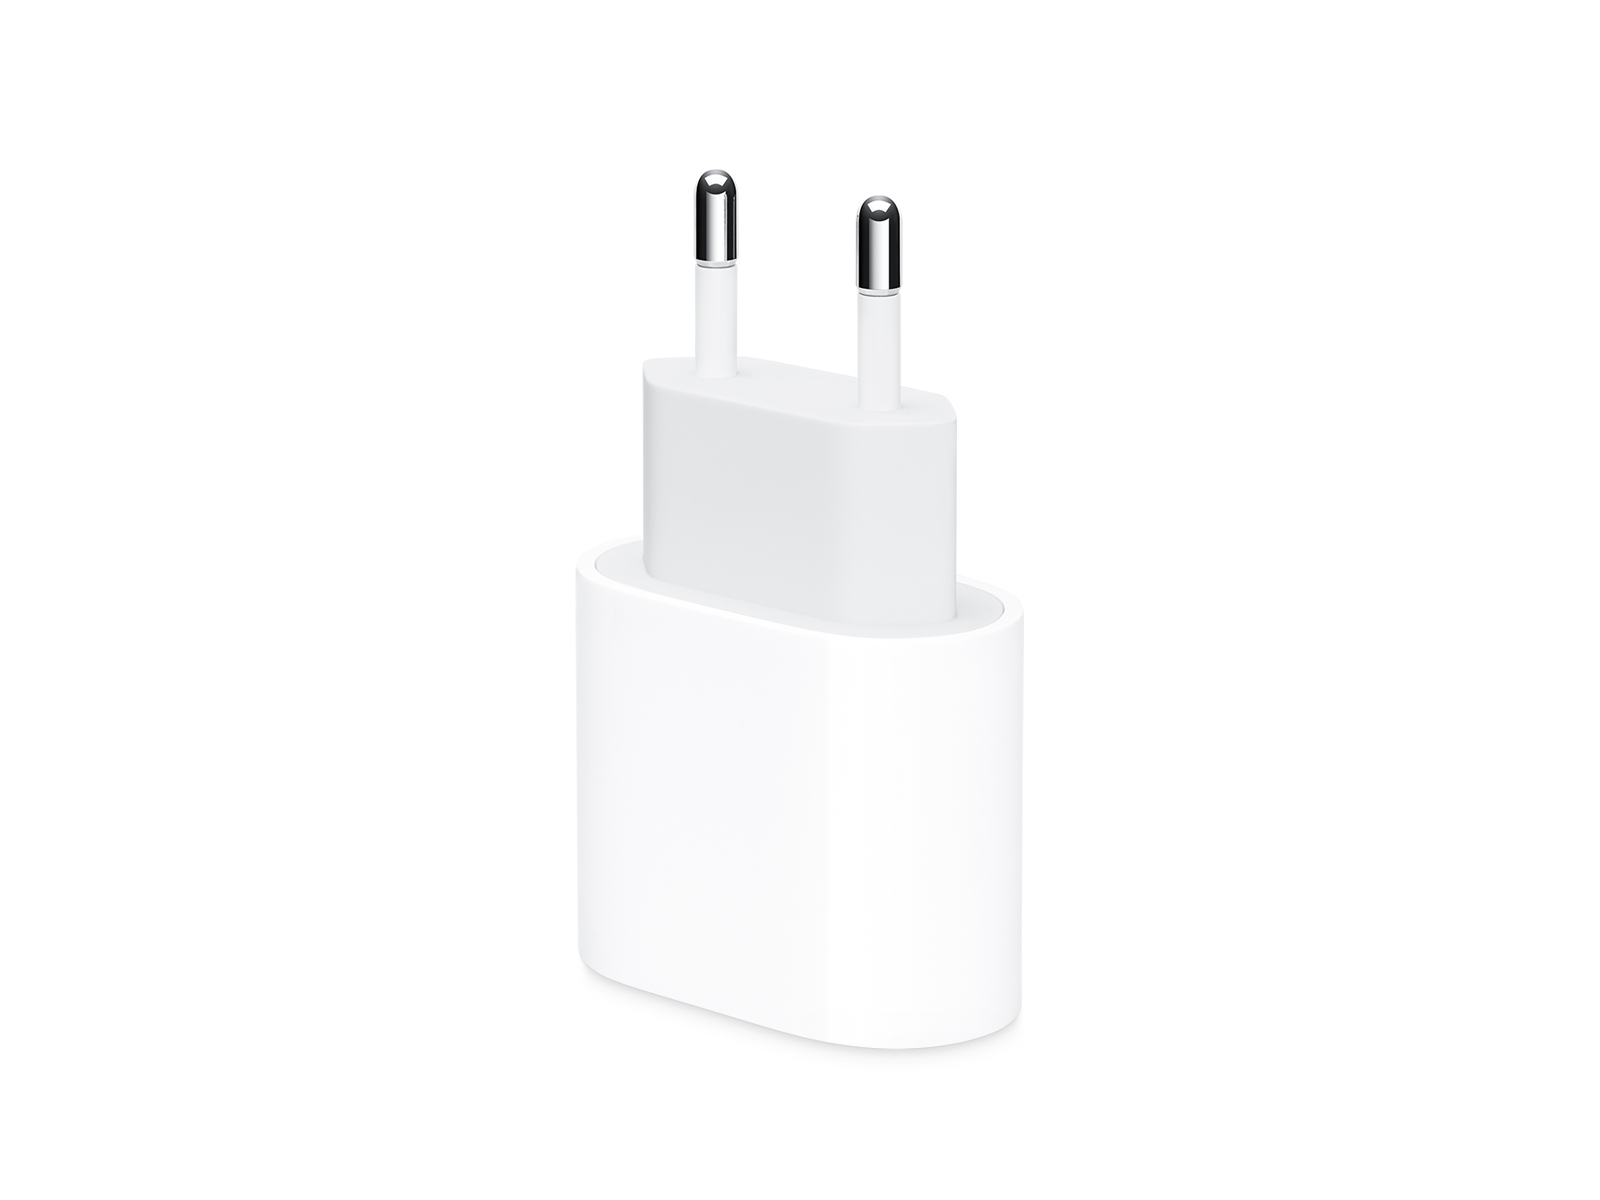 Kom forbi for at vide det nylon hjemmelevering Køb Apple 20W USB-C Power Adapter |  Humac Premium Reseller